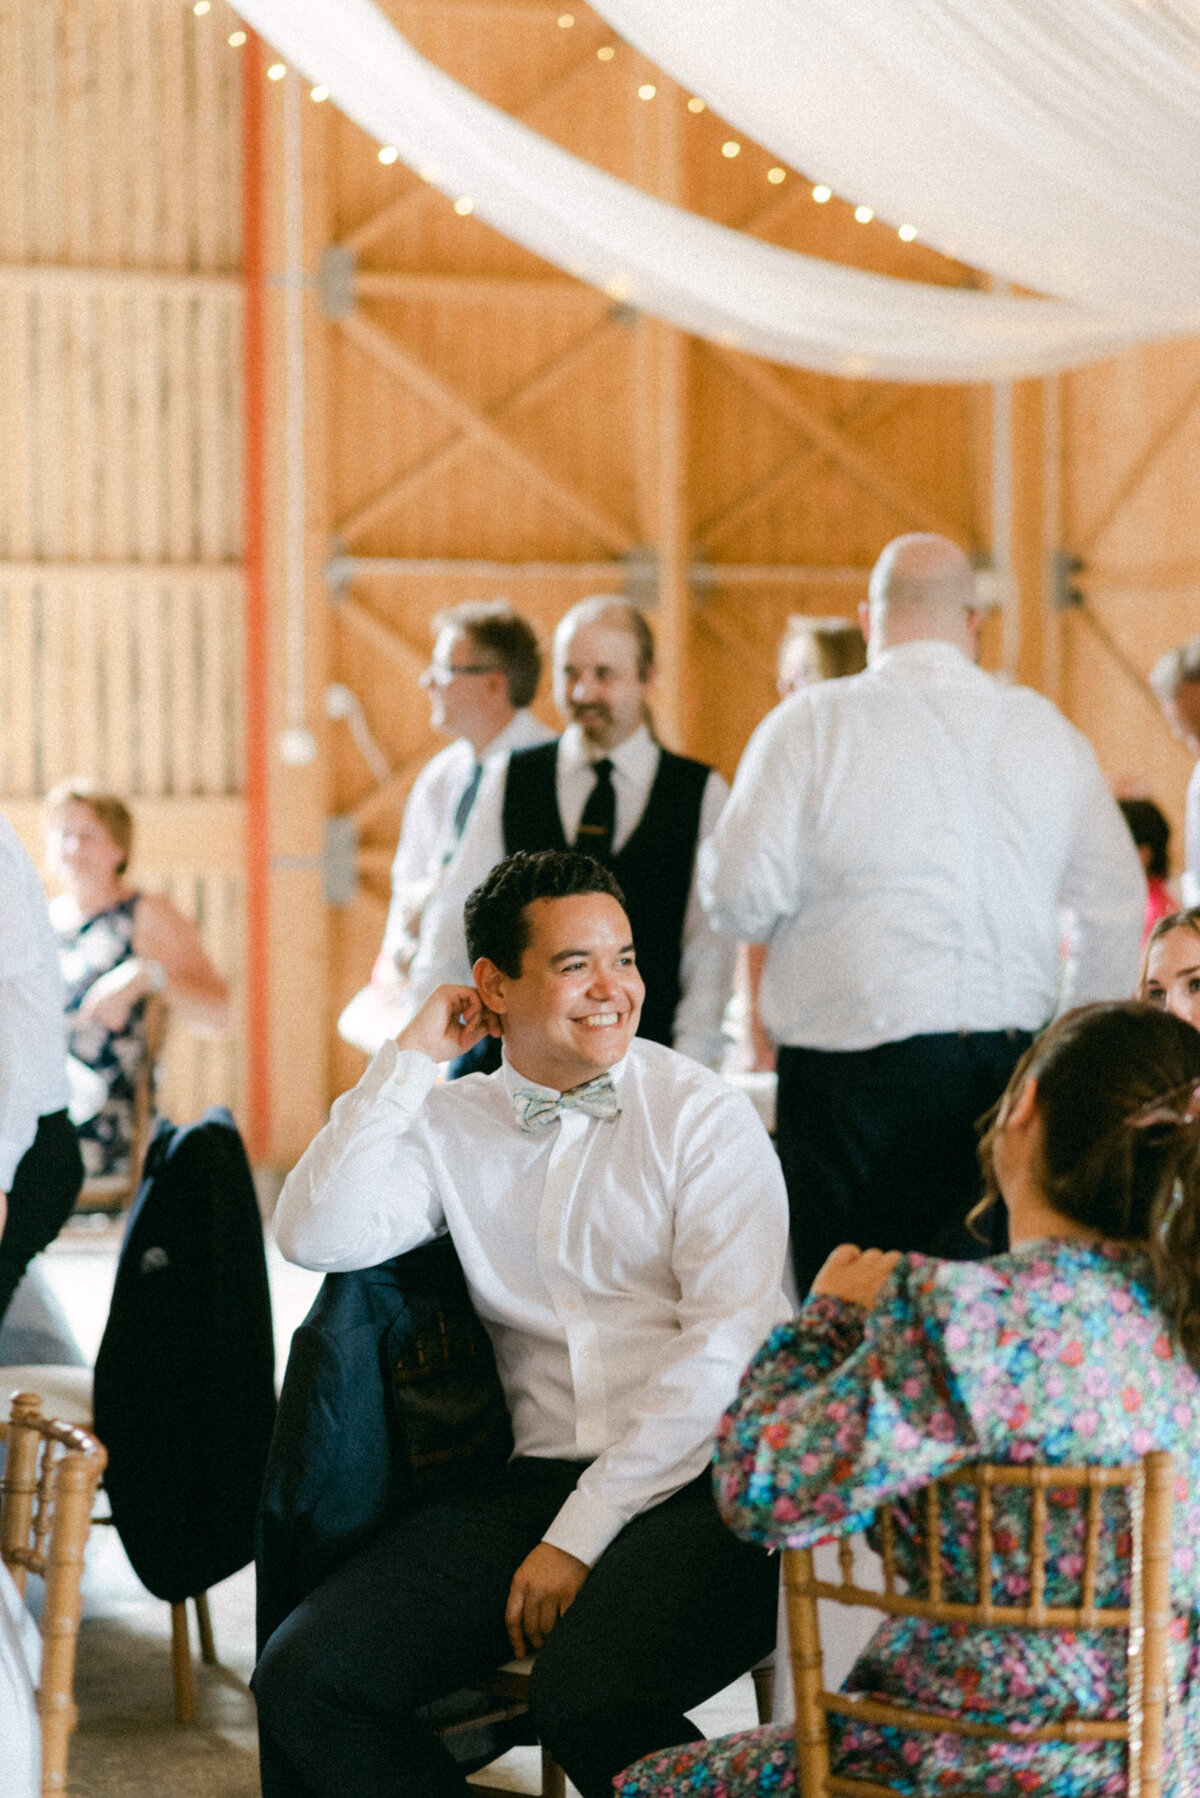 Guests at wedding reception captured by wedding photographer Hannika Gabrielsson.